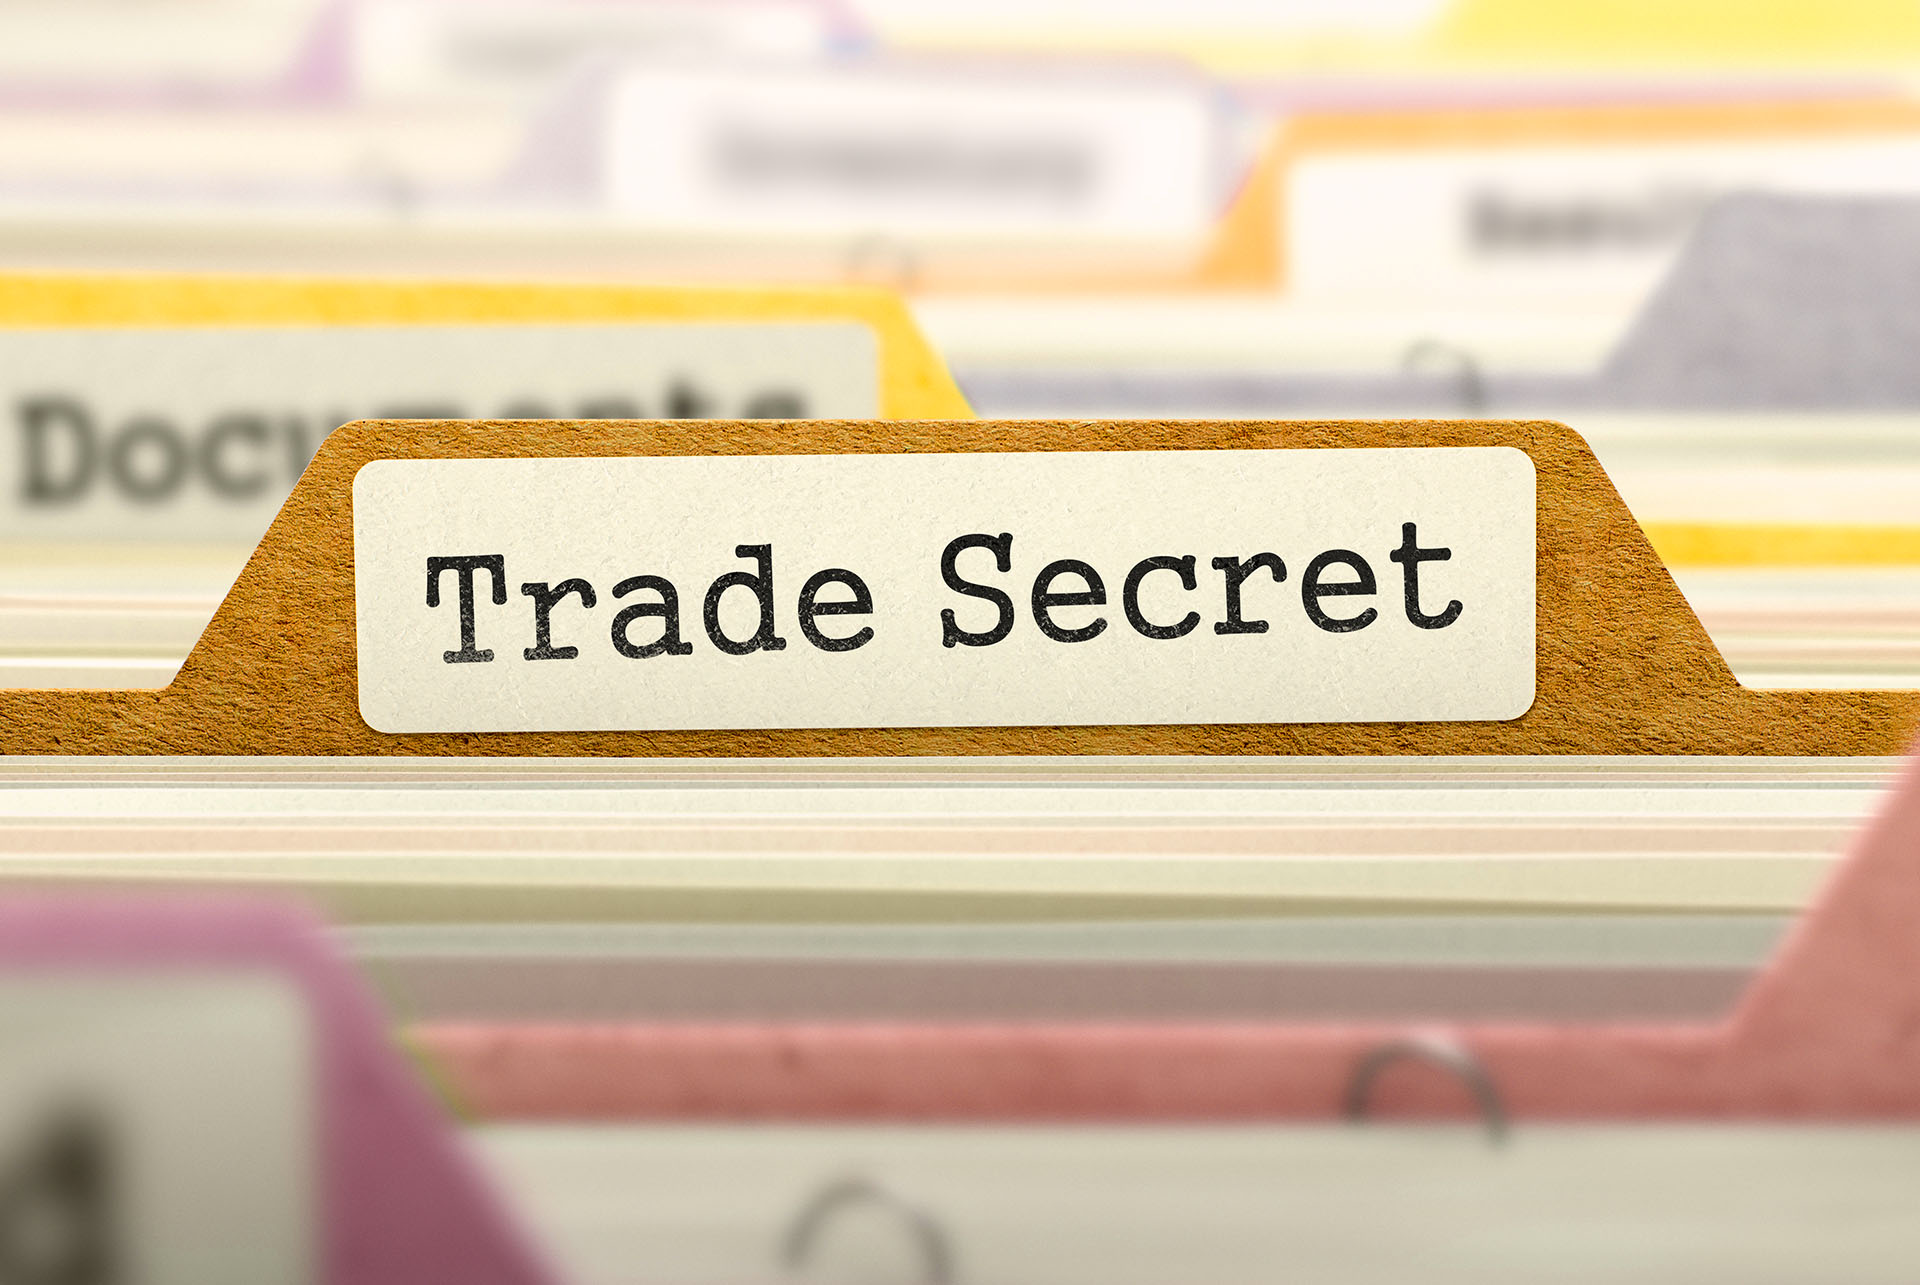 trade secret vs patent